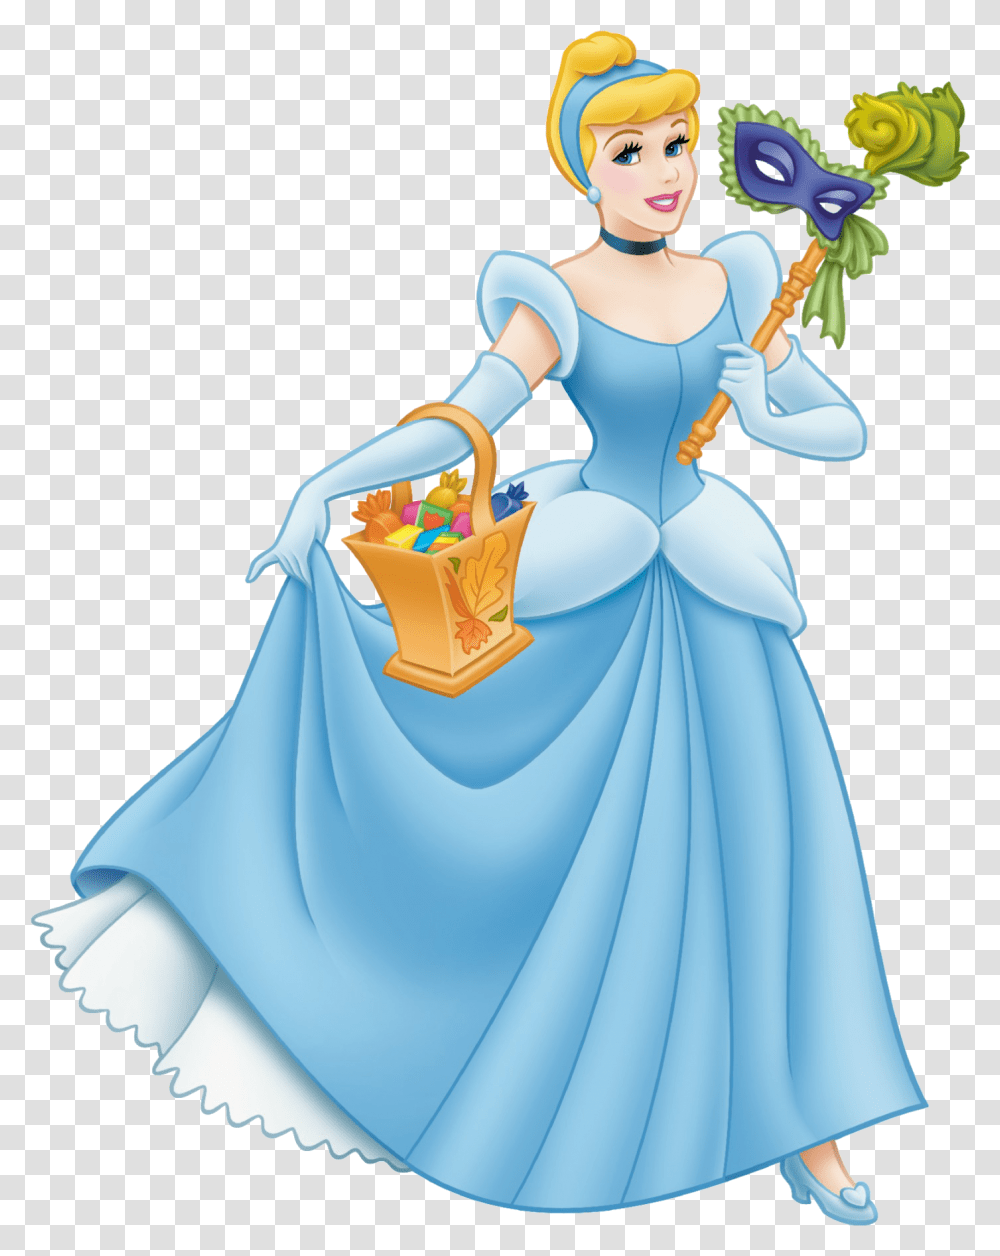 Cinderella Disney Princess The Walt Disney Company Disney Princess Cinderella, Person, Female, Wedding Gown Transparent Png